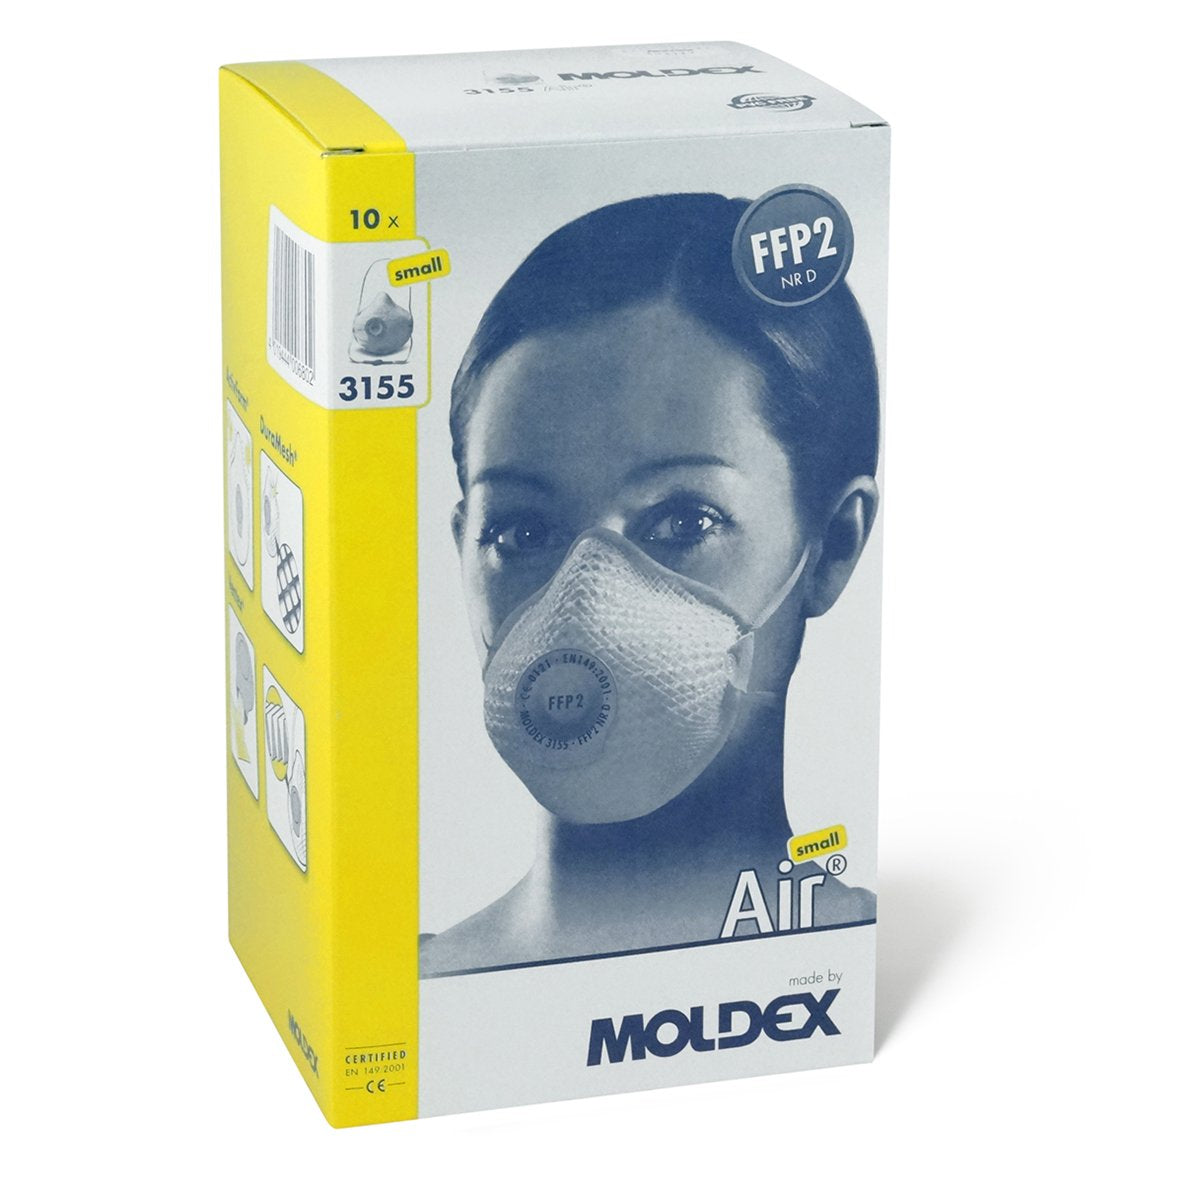 Moldex 3155 Air FFP2 NR D Masks Size Small 